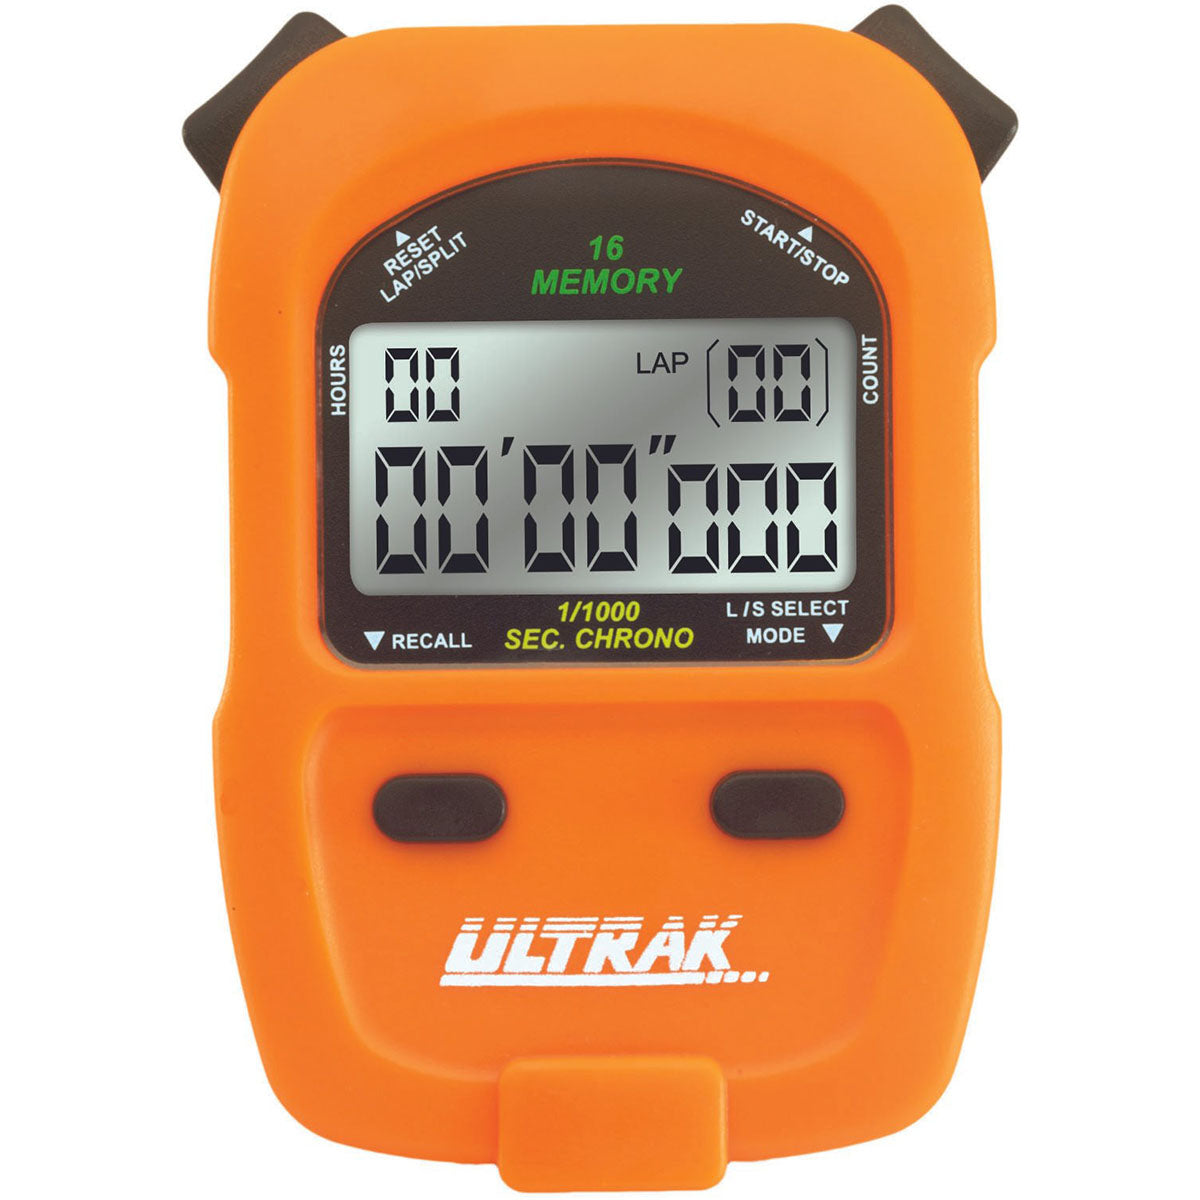 Ultrak 460 - 16 Lap or Cumulative Split Memory Stopwatch Ultrak